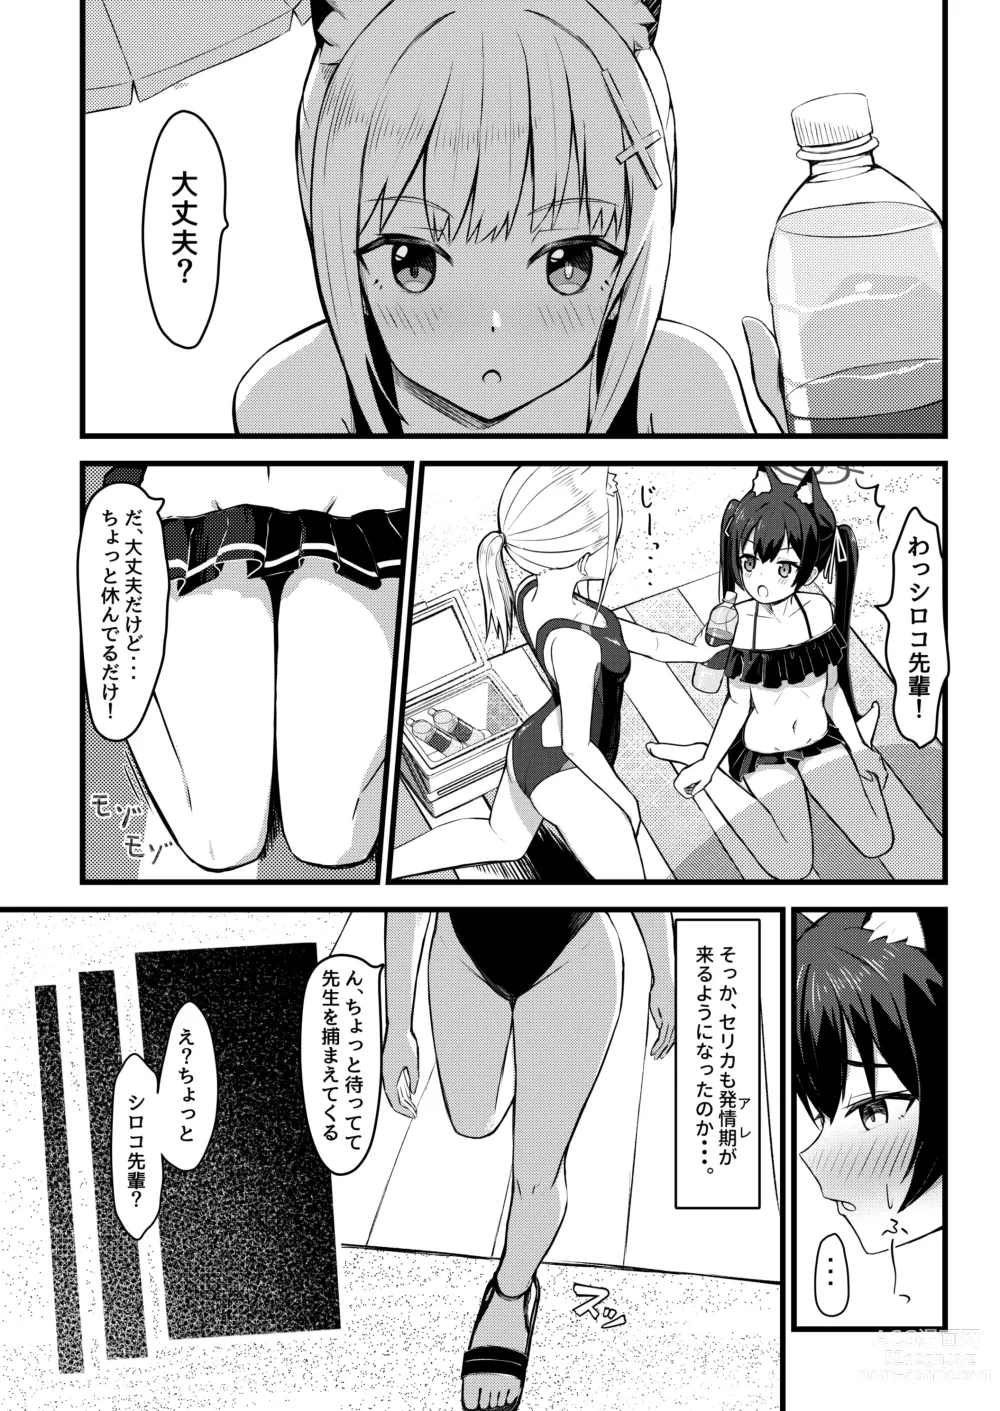 Page 4 of doujinshi ...Hm, Sensei o Osou no.